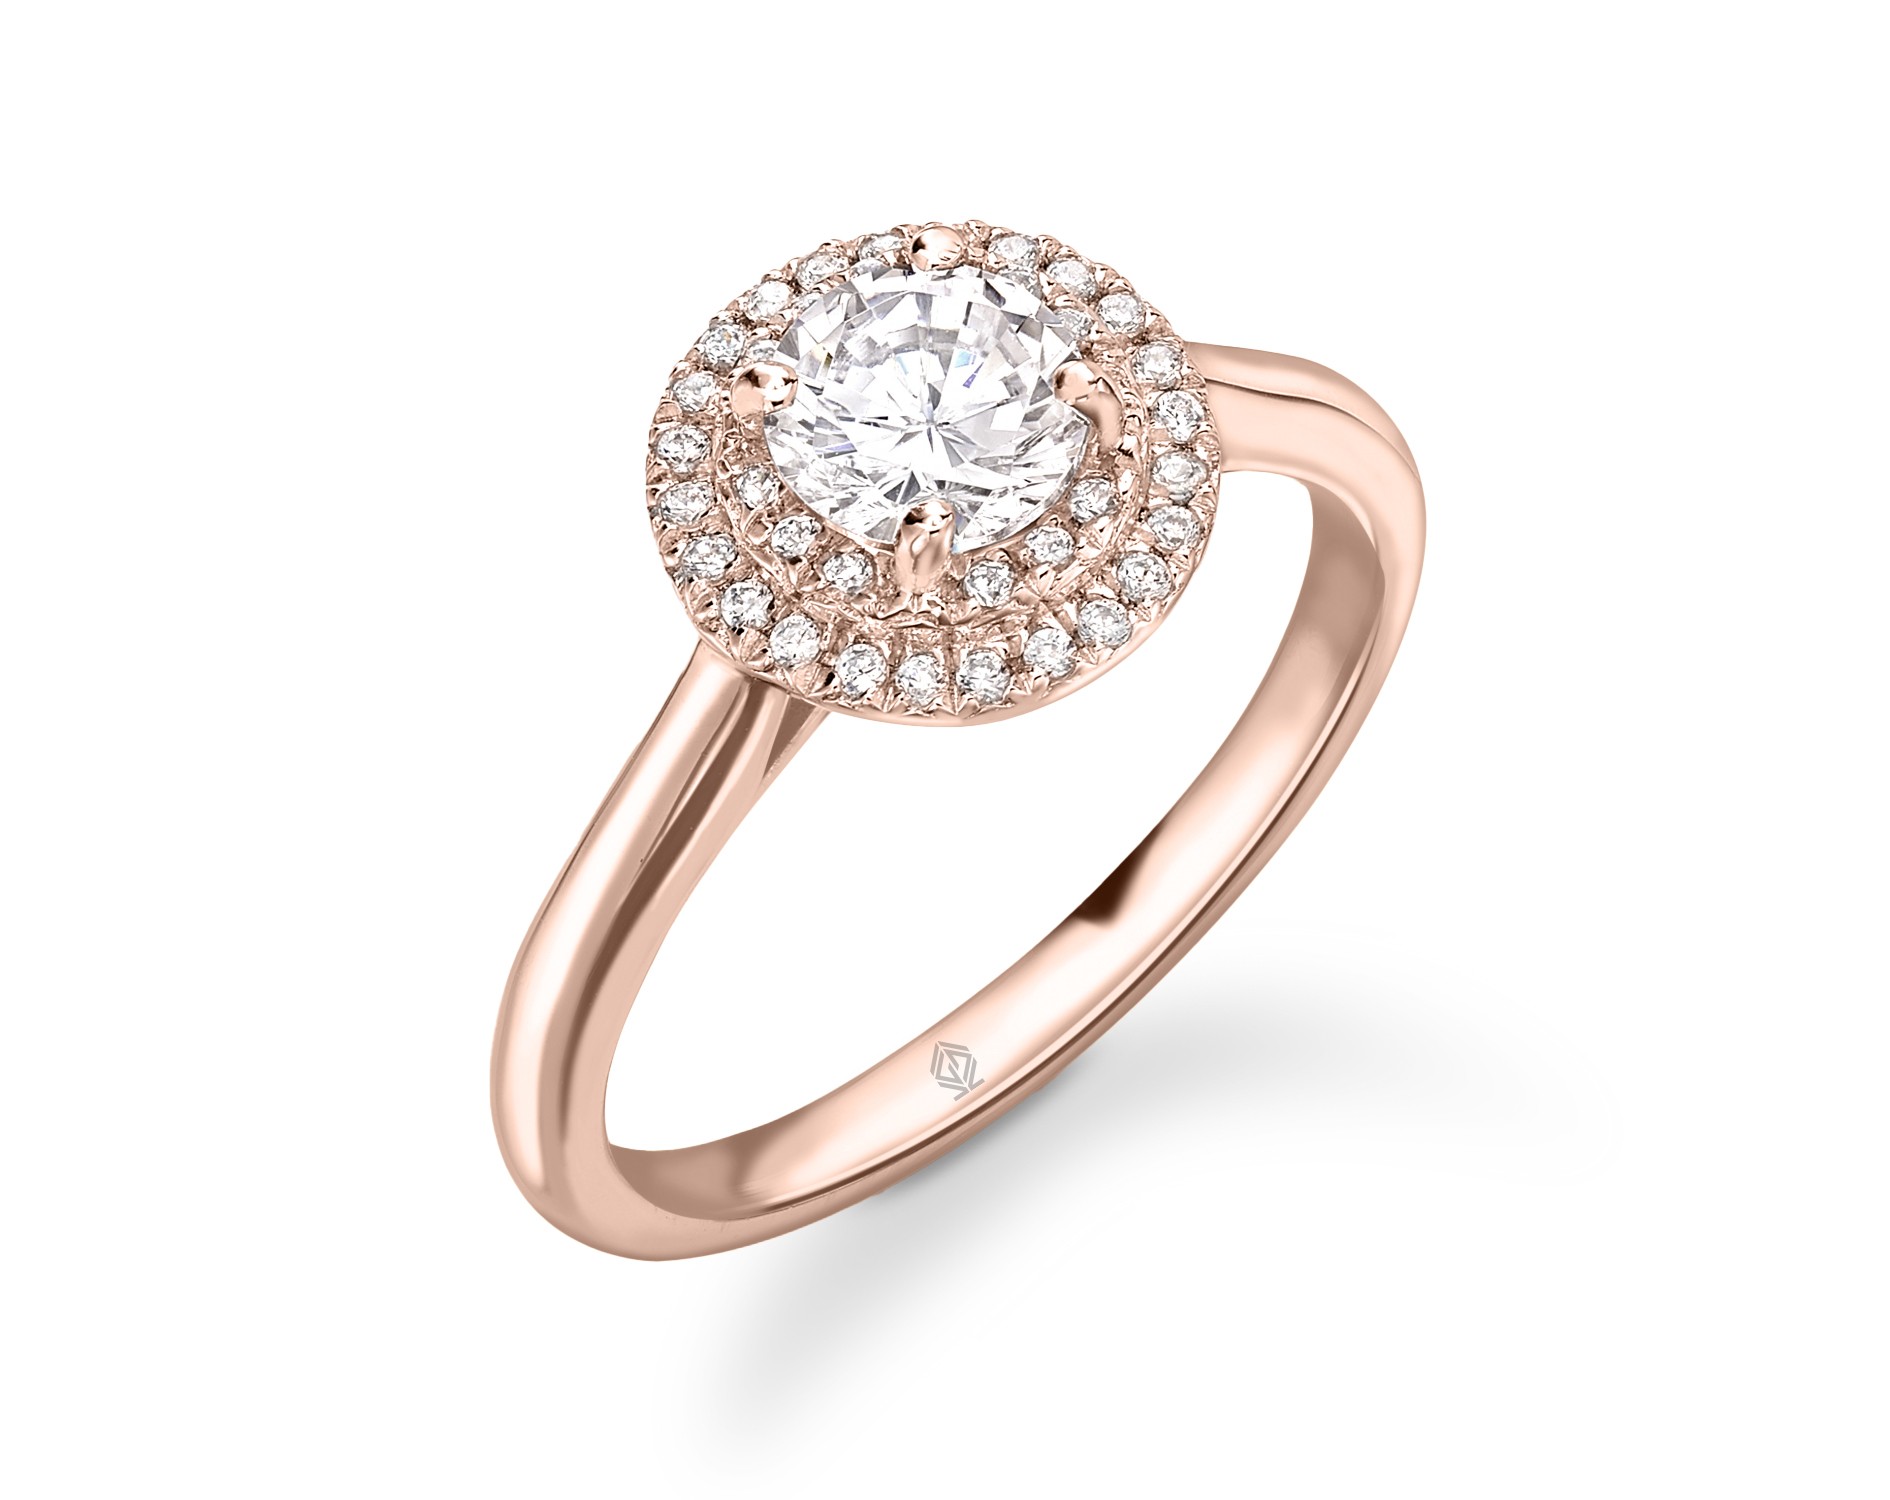 18K ROSE GOLD DOUBLE HALO ROUND CUT DIAMOND ENGAGEMENT RING